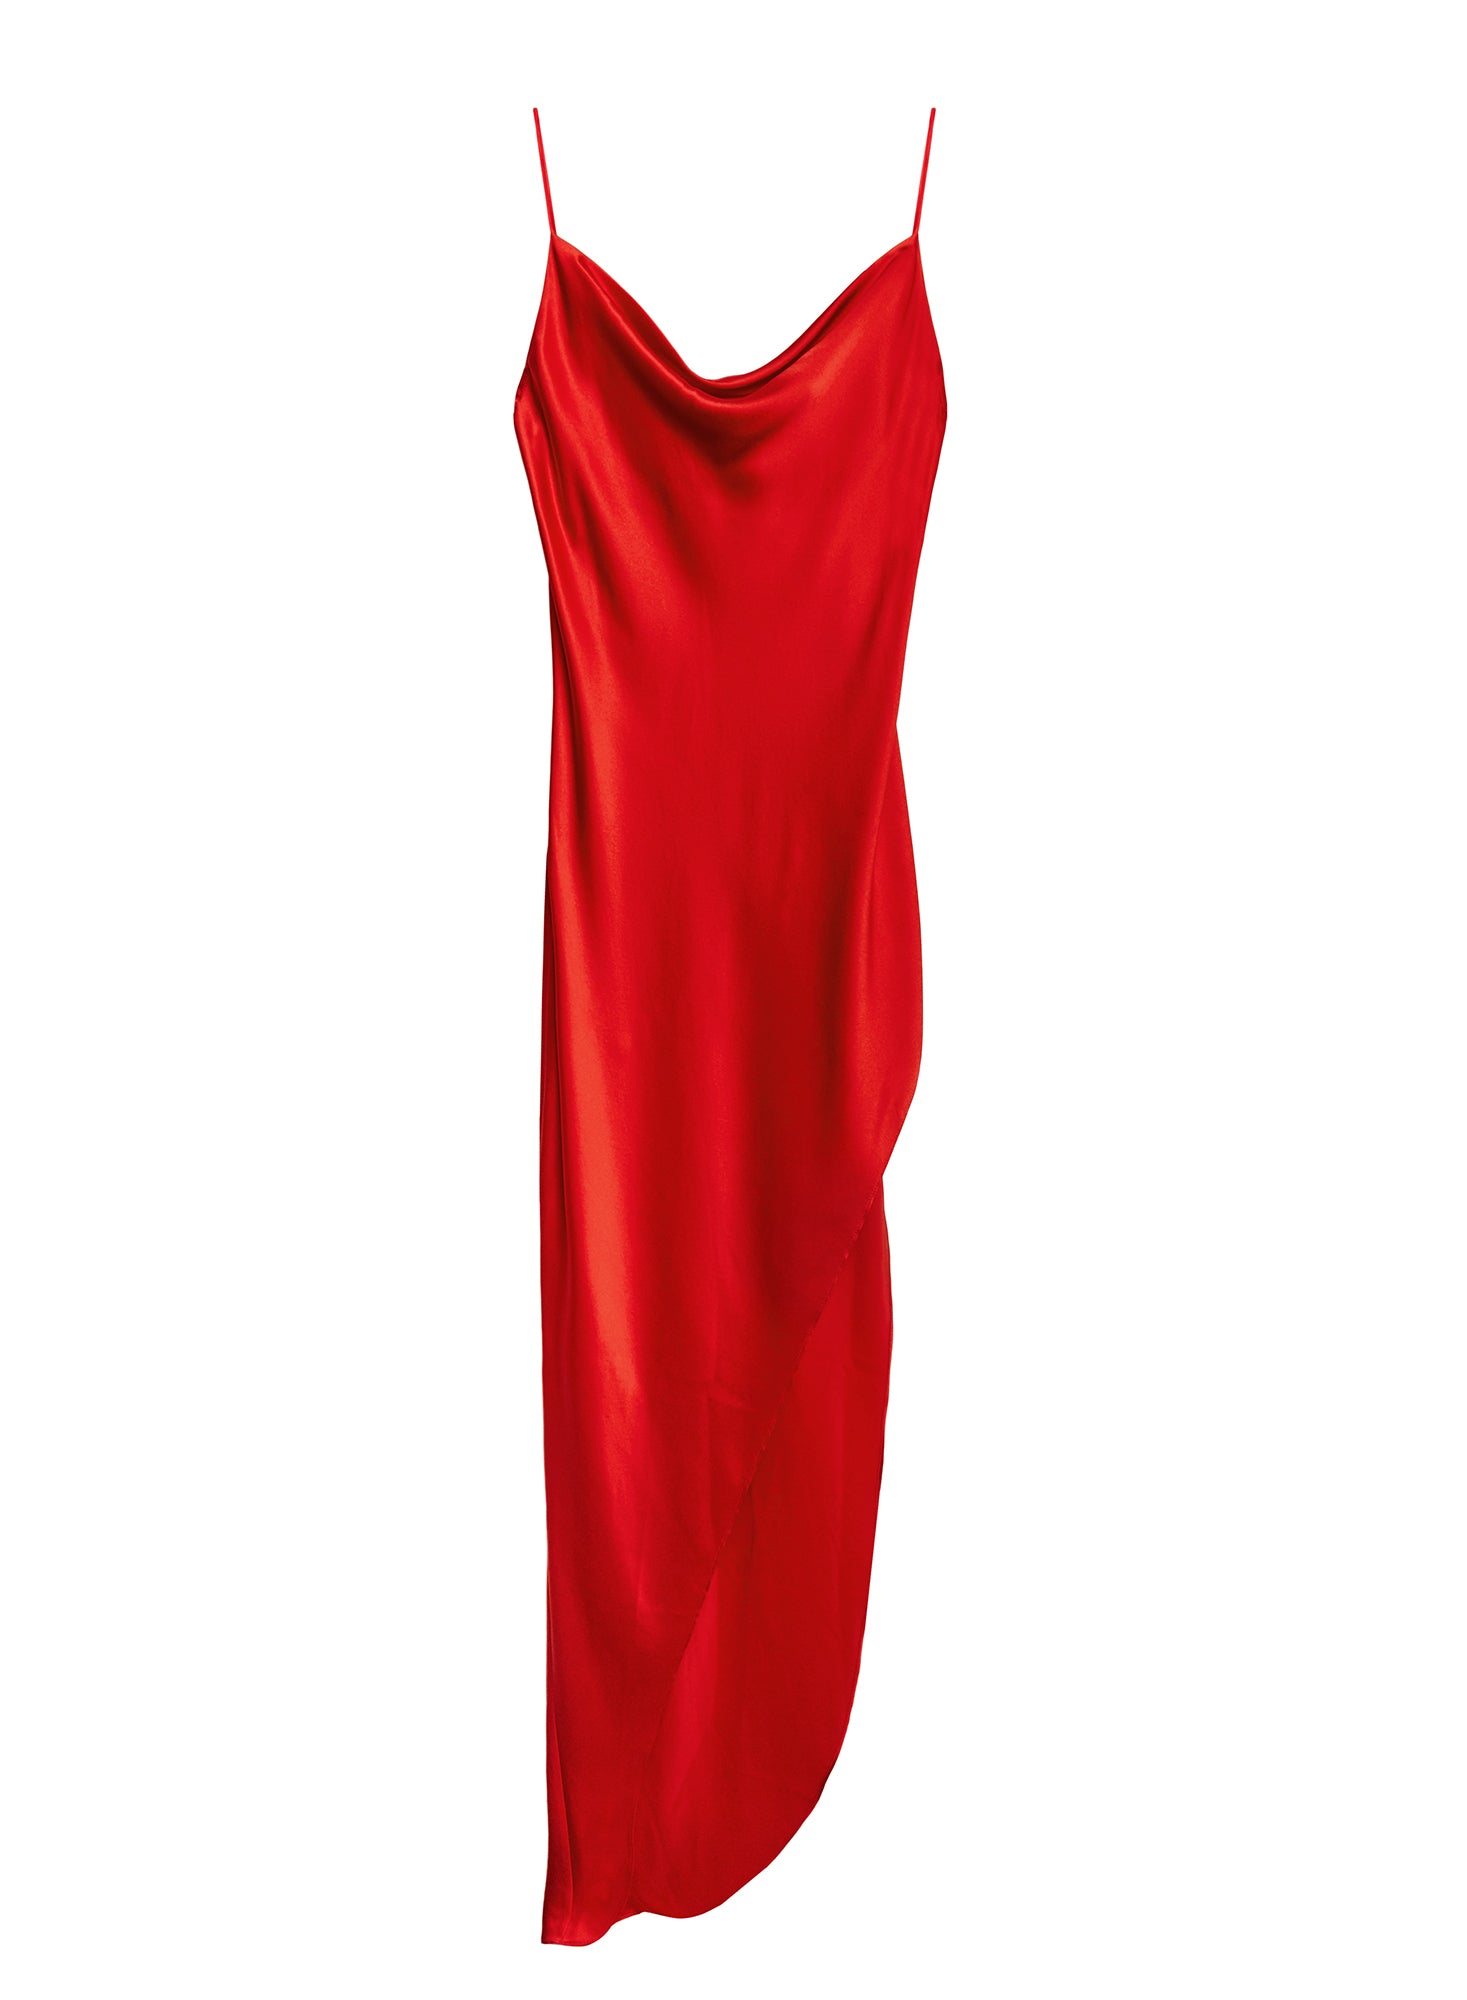 Roxanna Red Cowl Neck Floral Satin Slip Dress